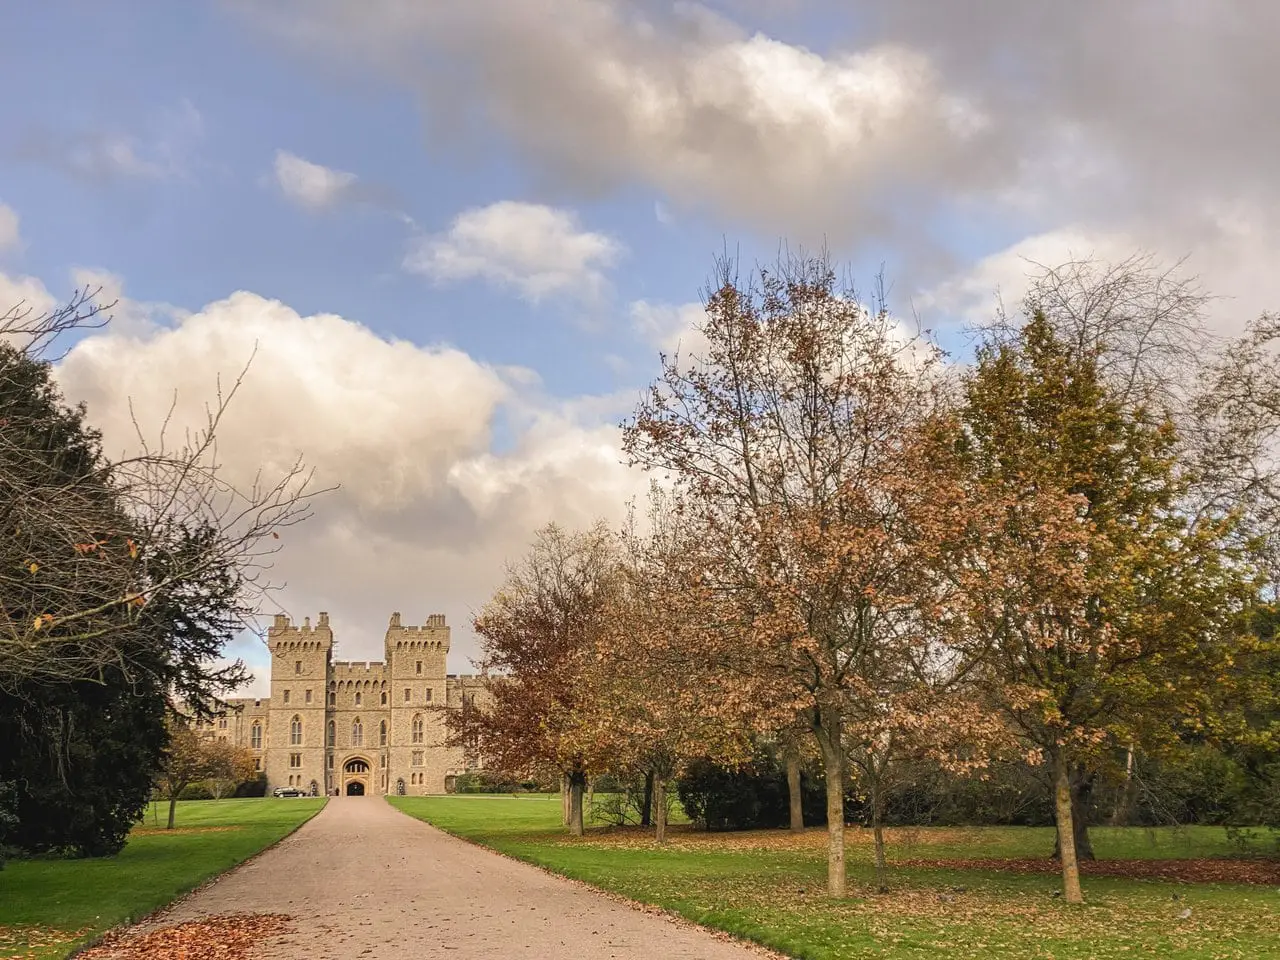 The Long Walk to Windsor castle, England